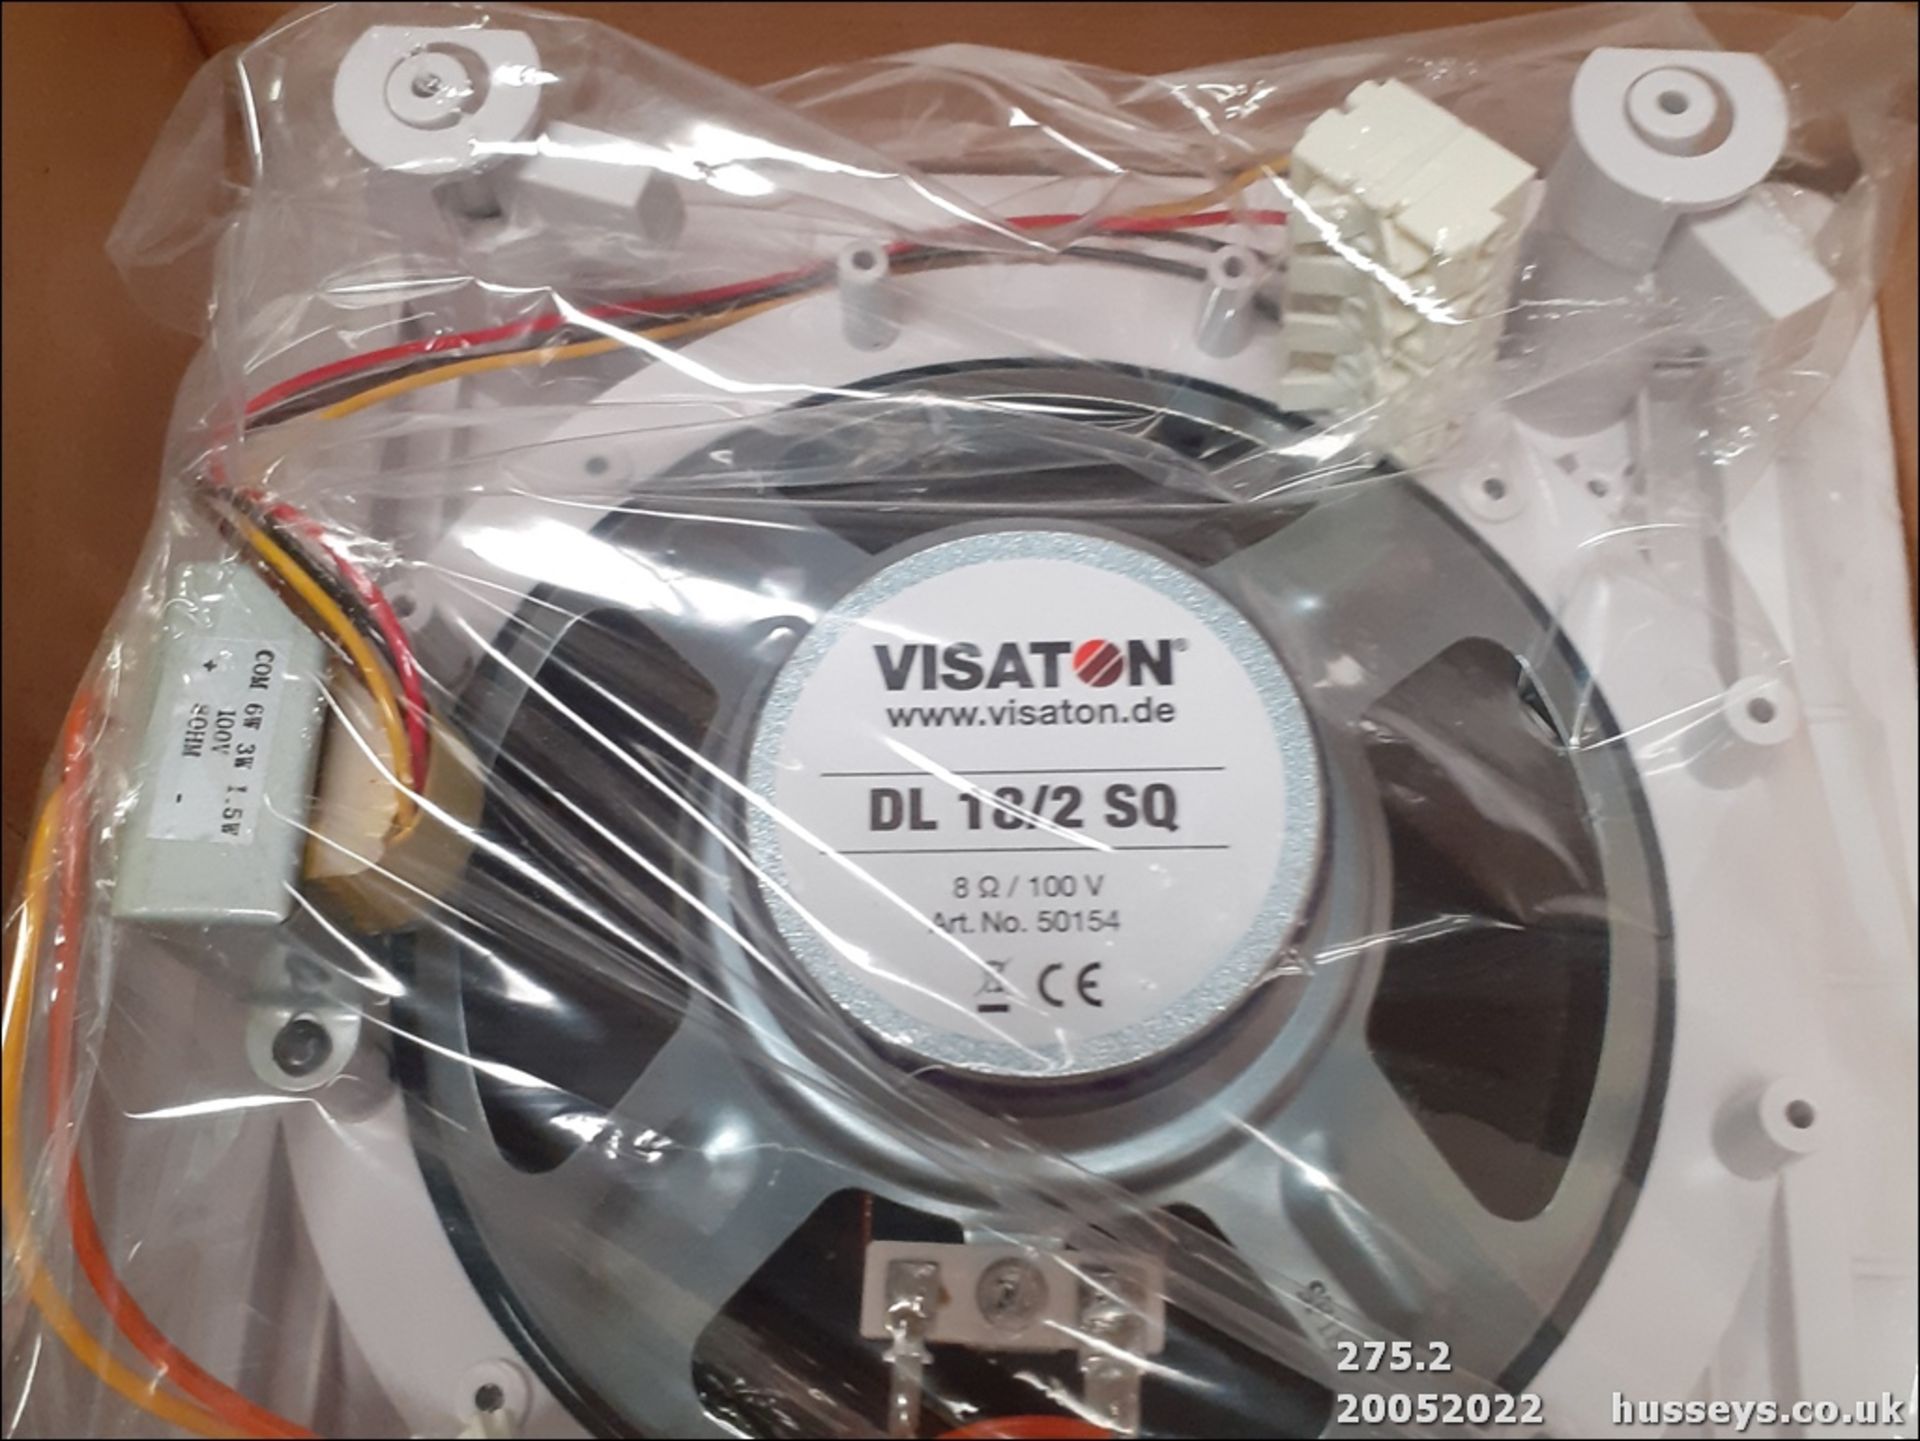 Visaton DL 18/2 SQ Art no. 50154 - 8 - 100V Transformer matching (Qnty: 2) - Image 3 of 3